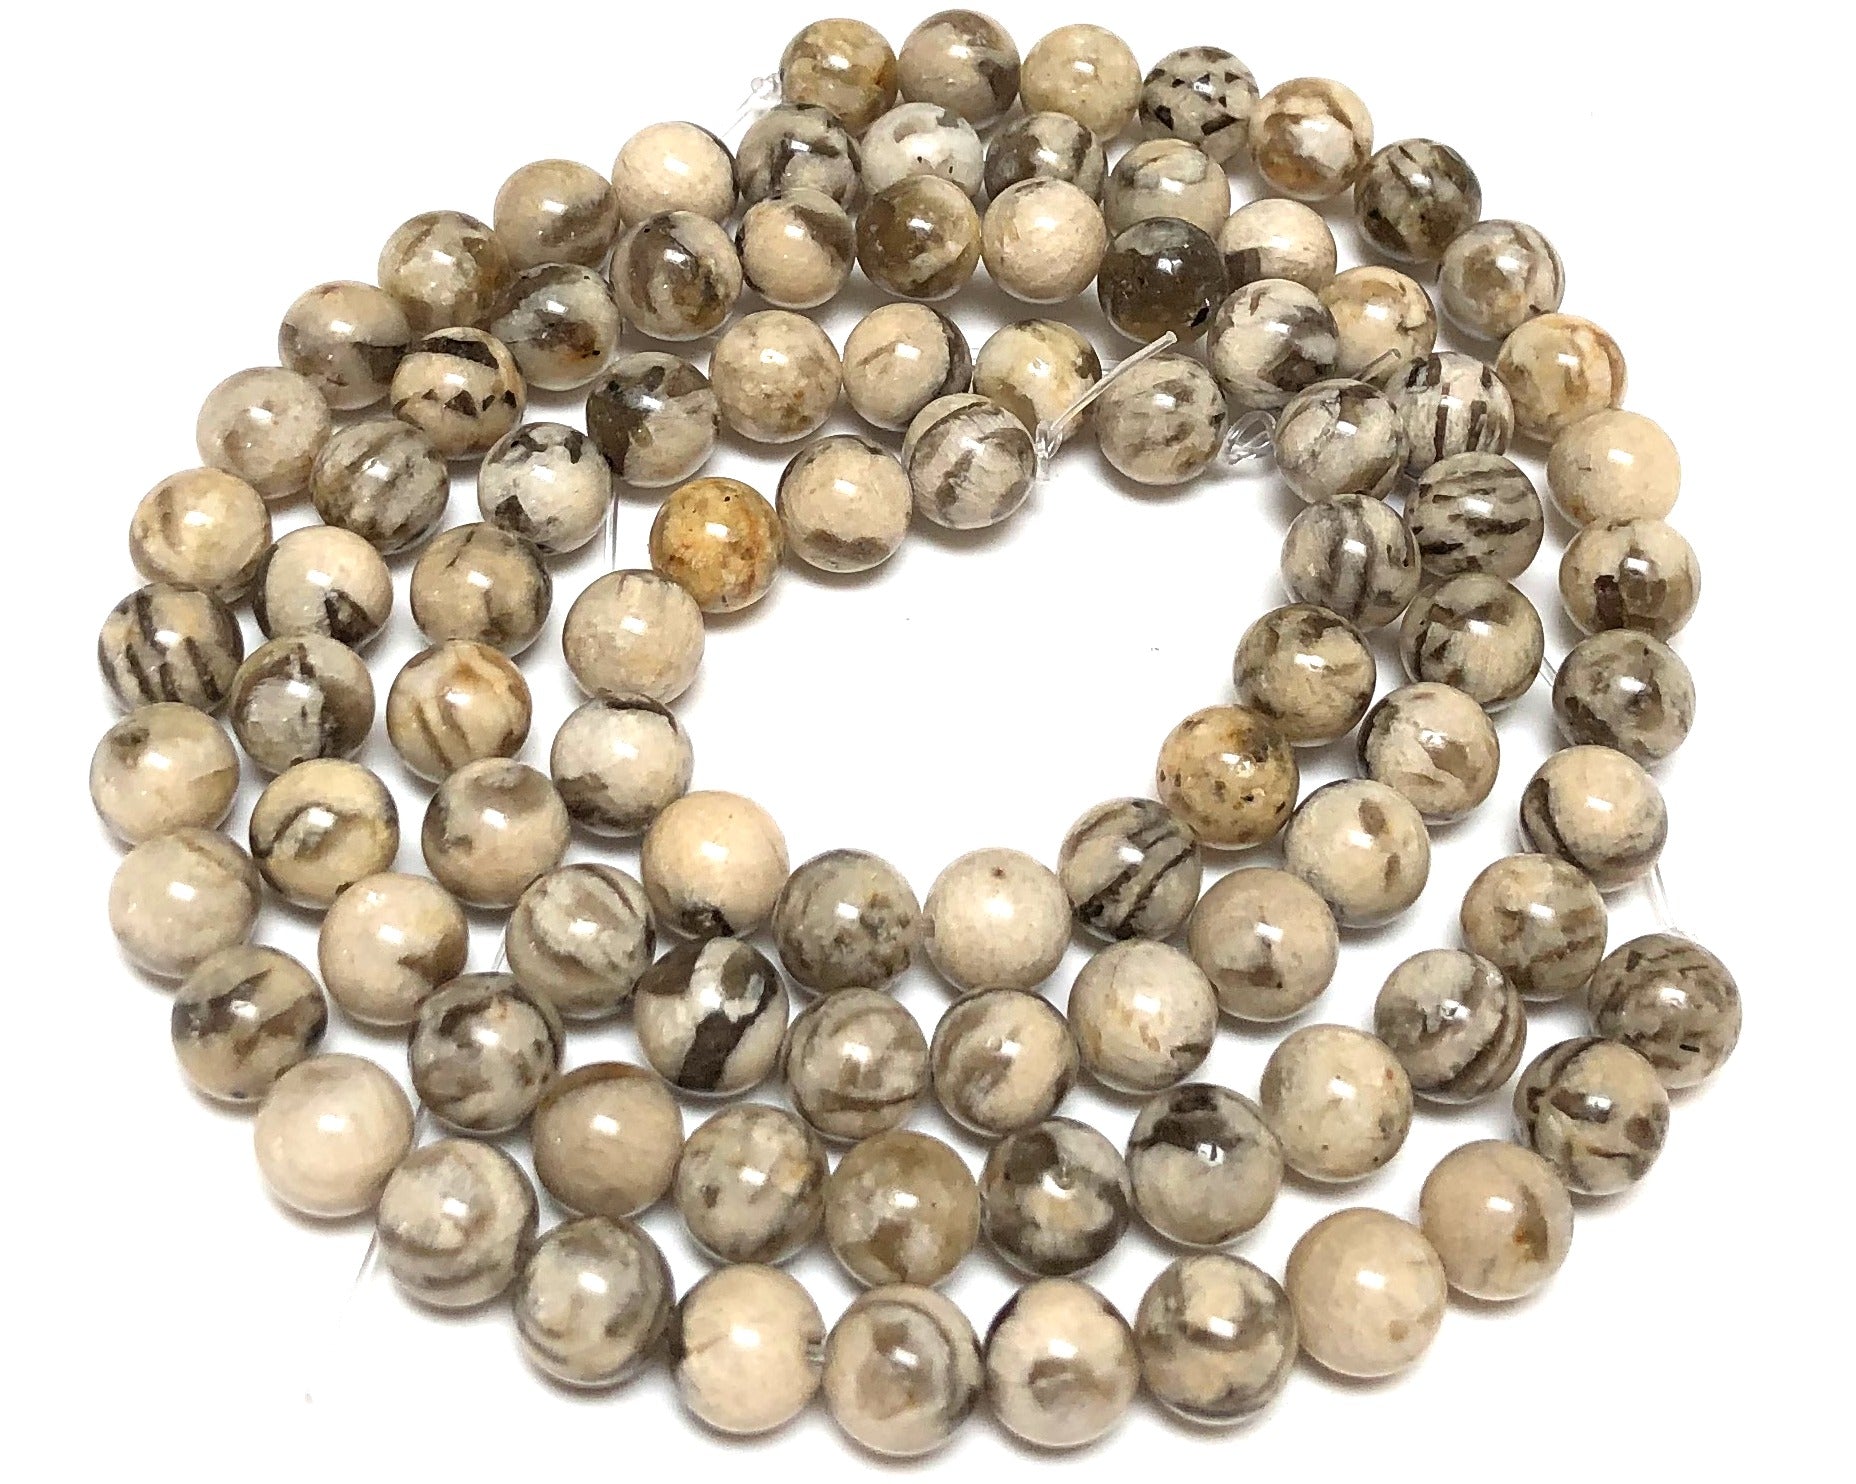 Graphic Feldspar 8mm round natural Zebradorite gemstone beads 15" strand - Oz Beads 